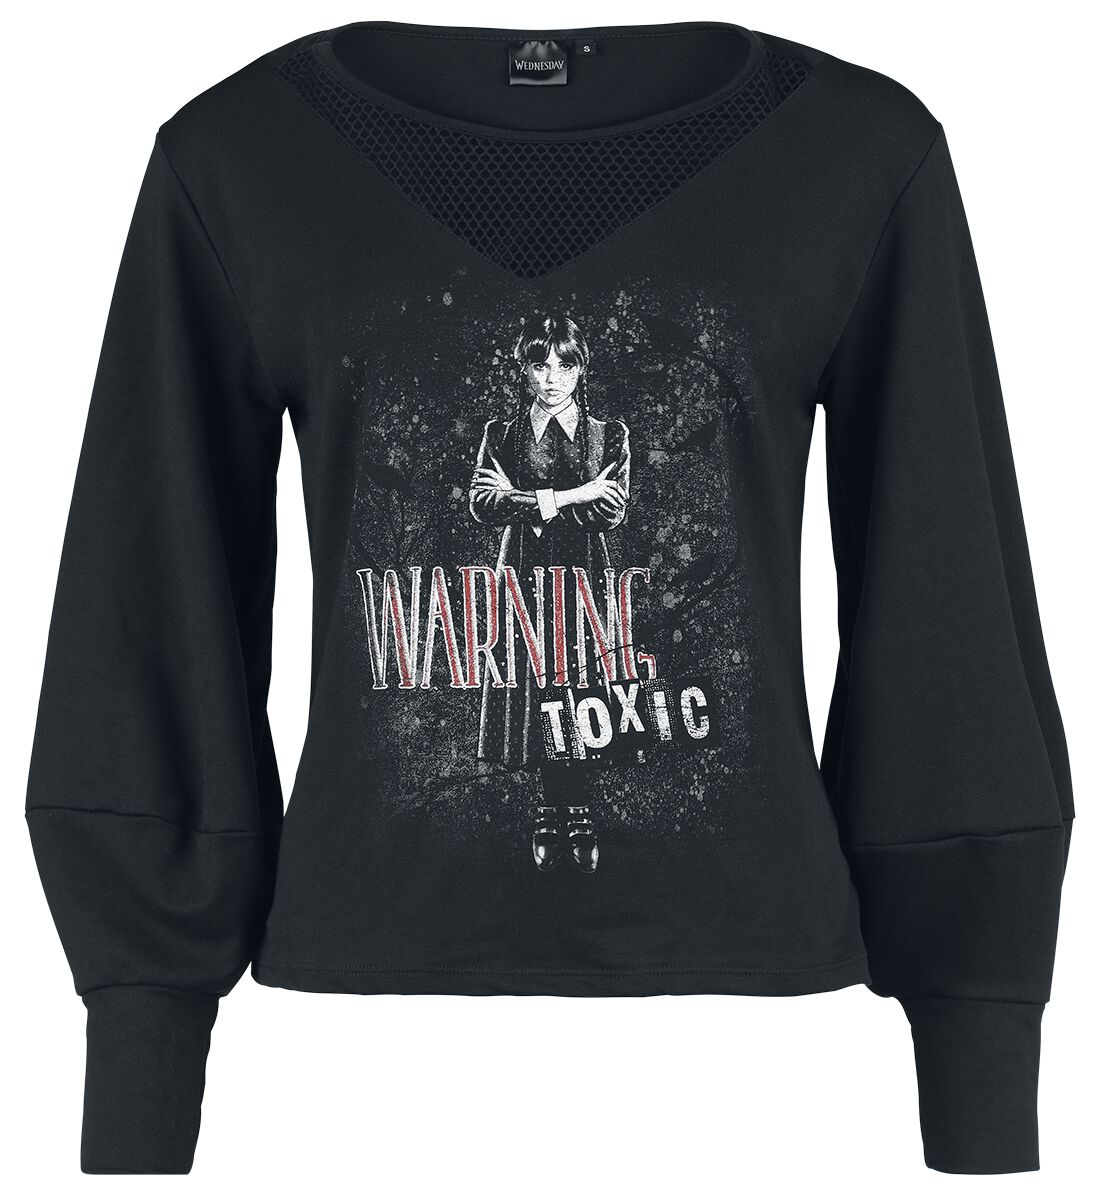 Wednesday - Warning - Toxic - Sweatshirt - schwarz - EMP Exklusiv!